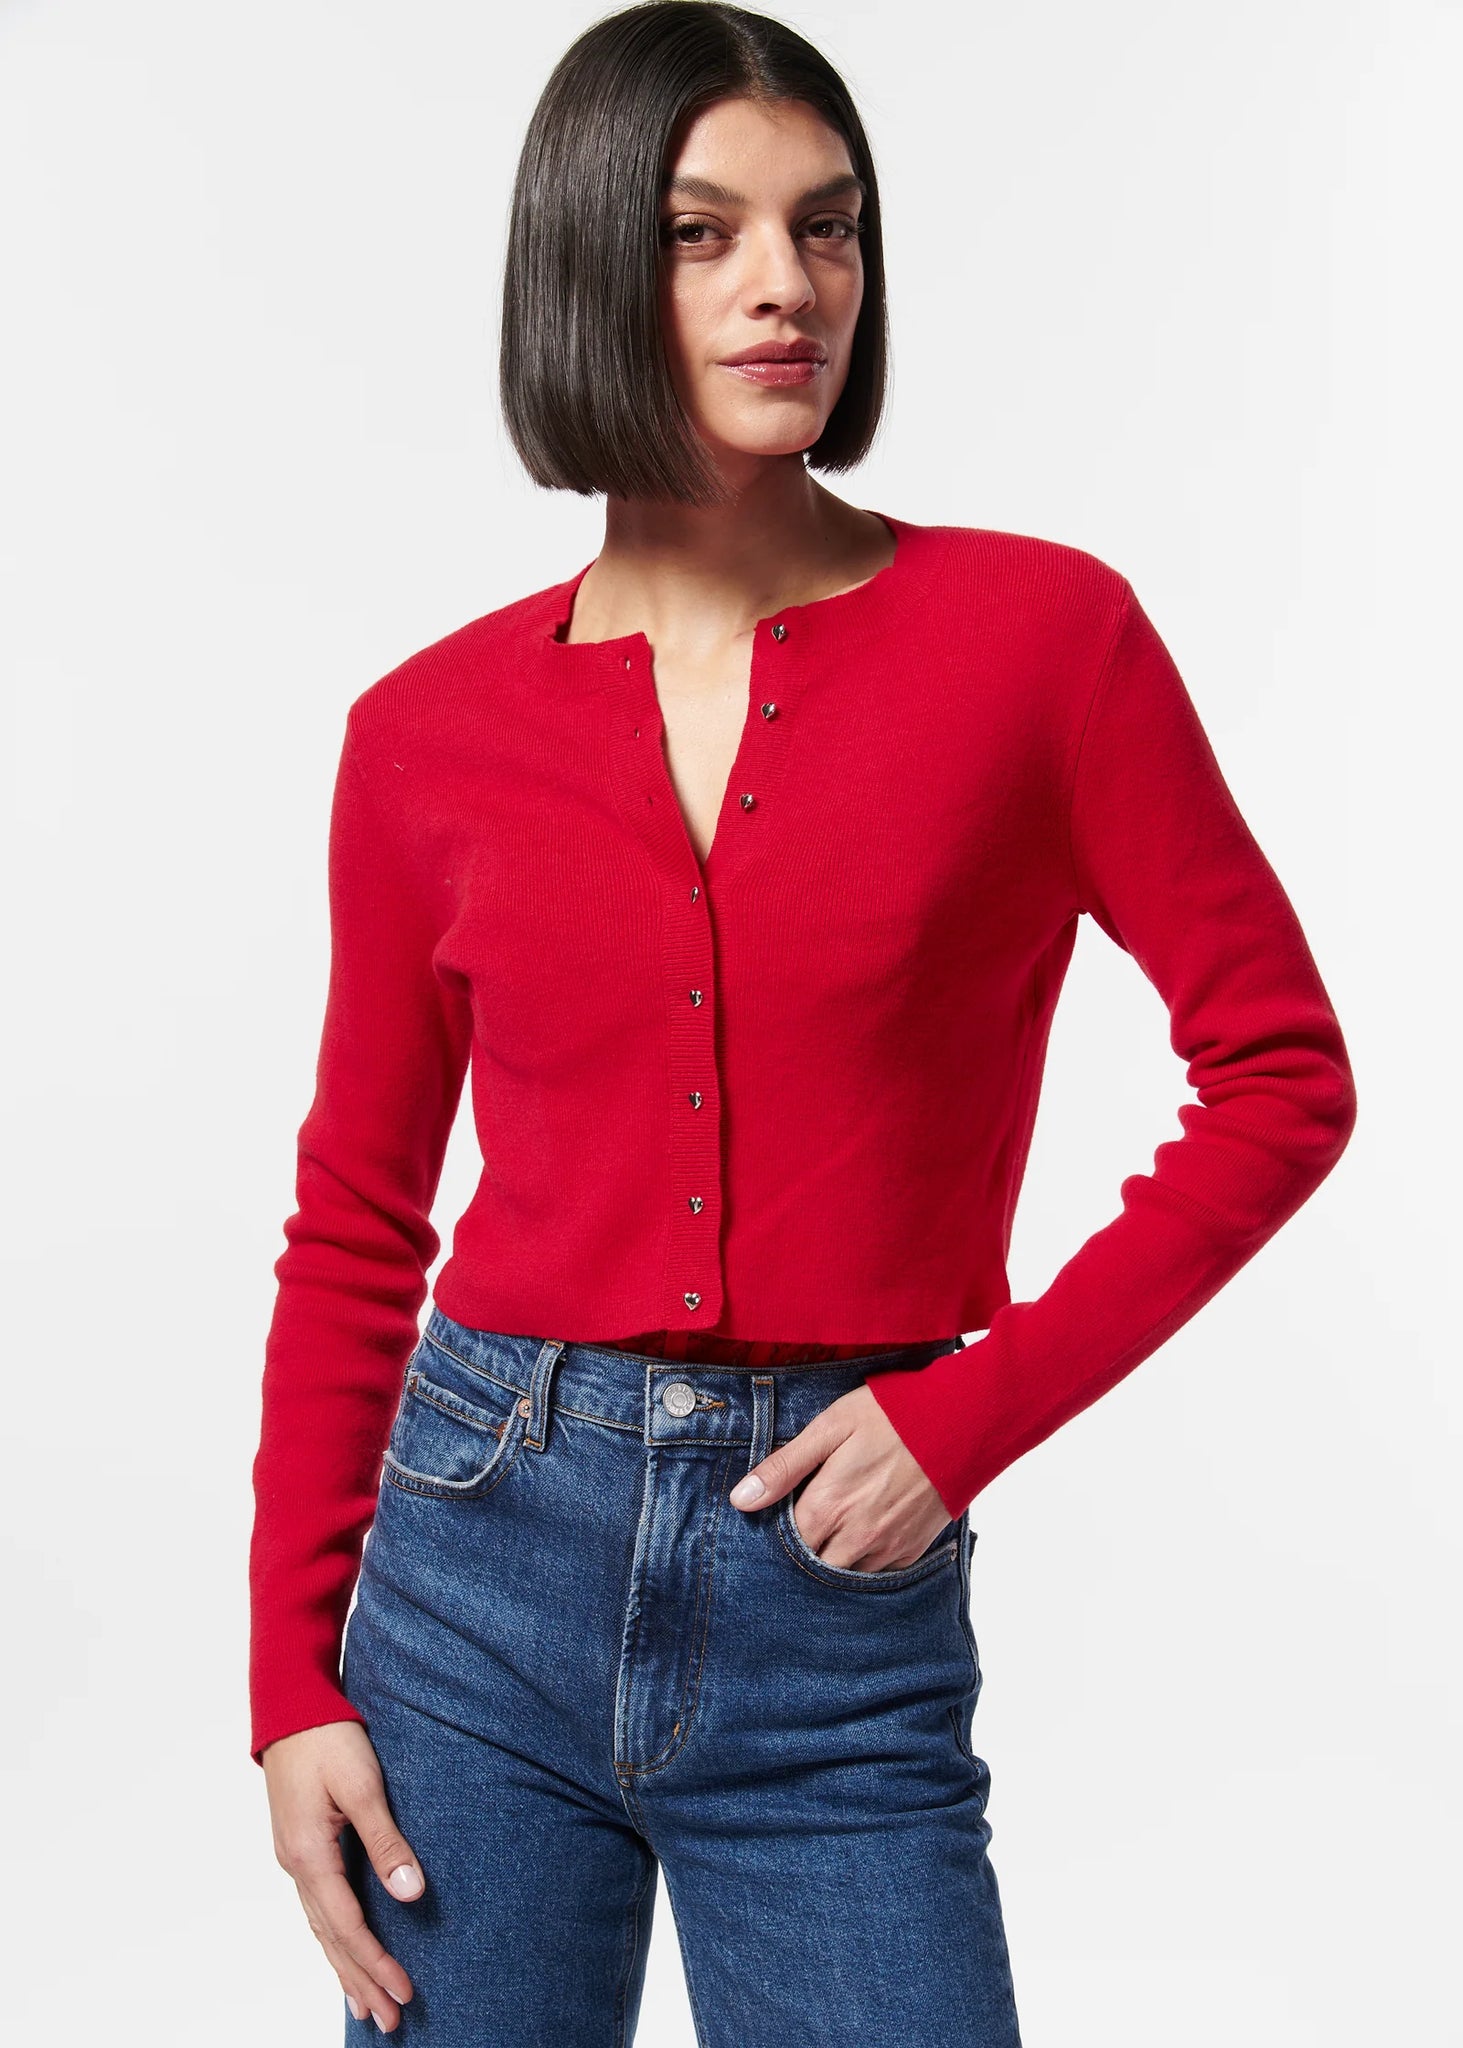 Cami NYC Kimbra Sweater - Scarlet